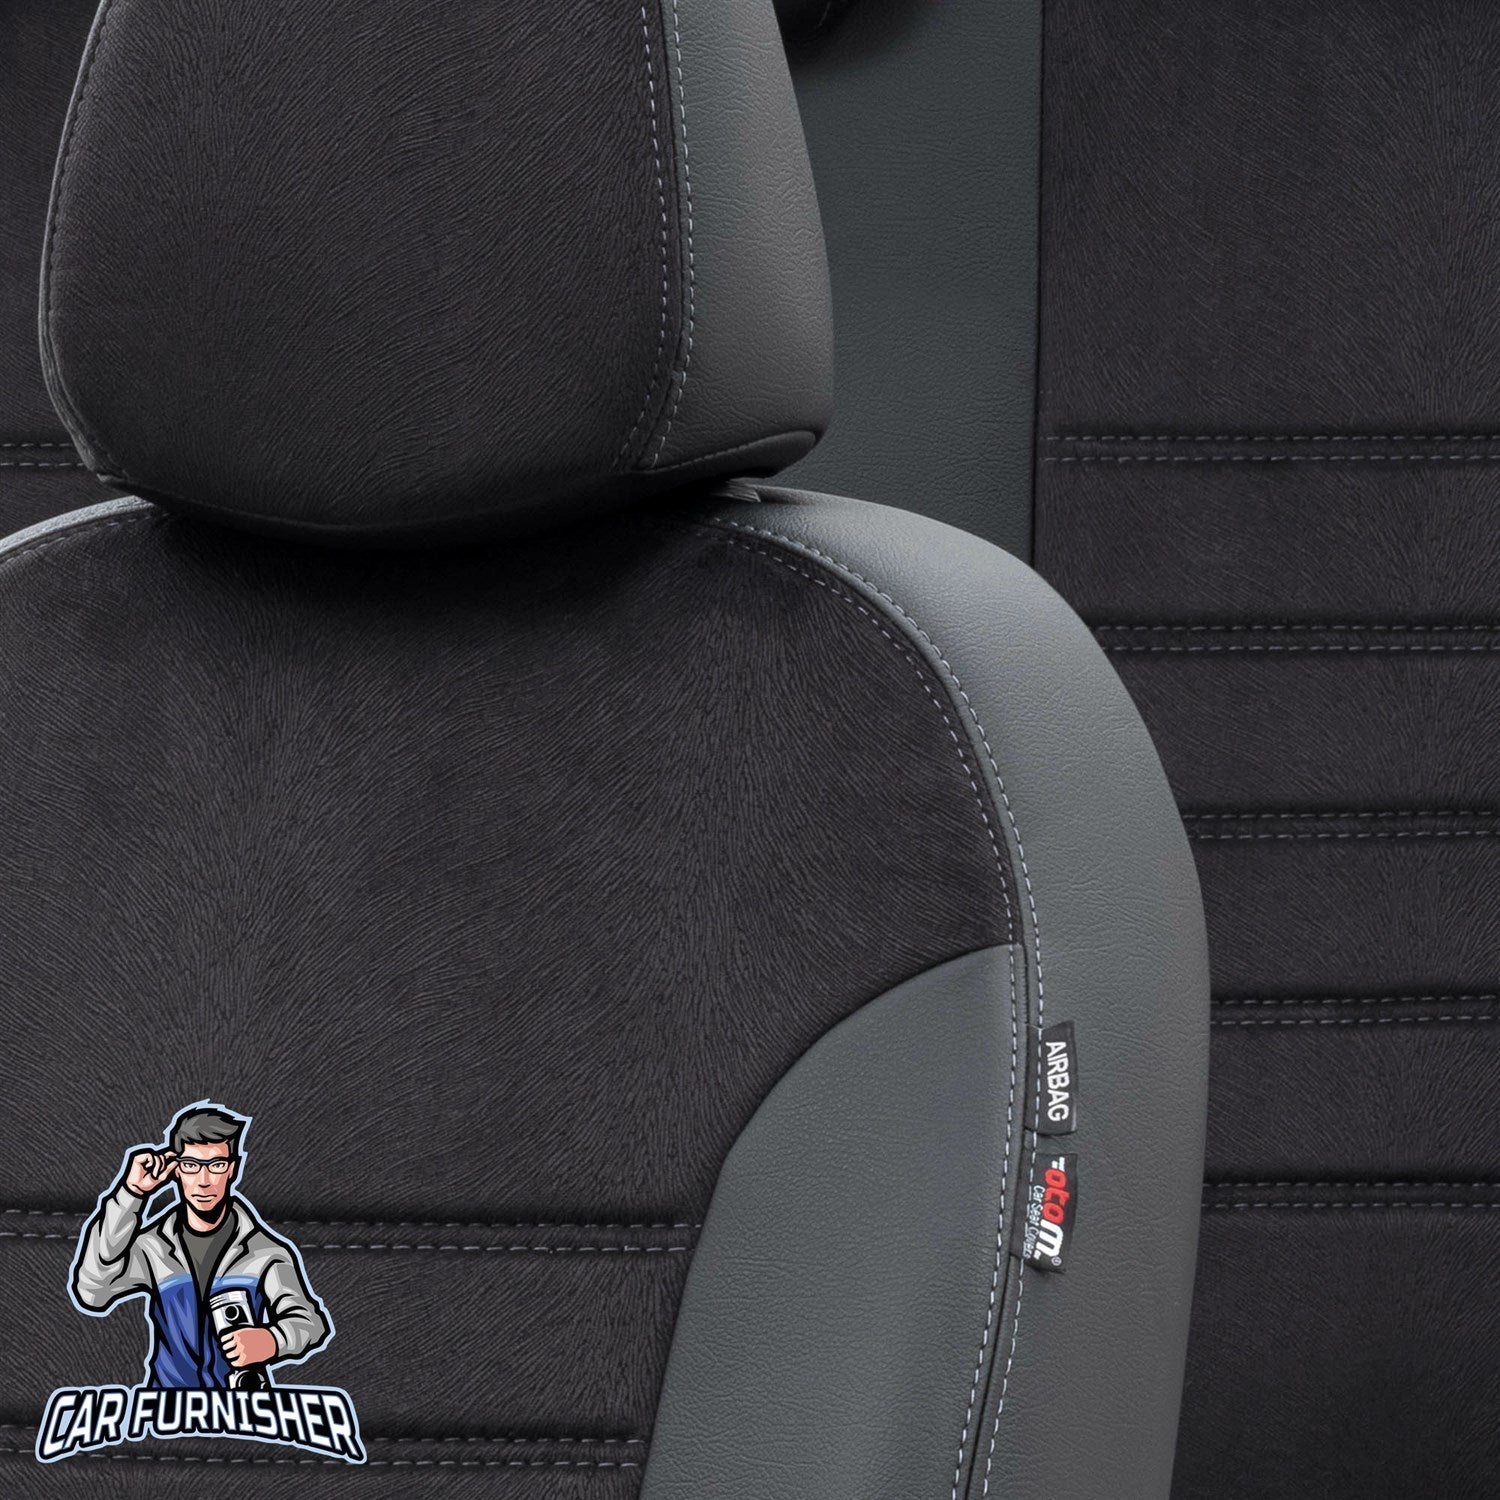 Renault Scenic Car Seat Covers 1997-2016 London Design Black Full Set (5 Seats + Handrest) Leather & Fabric